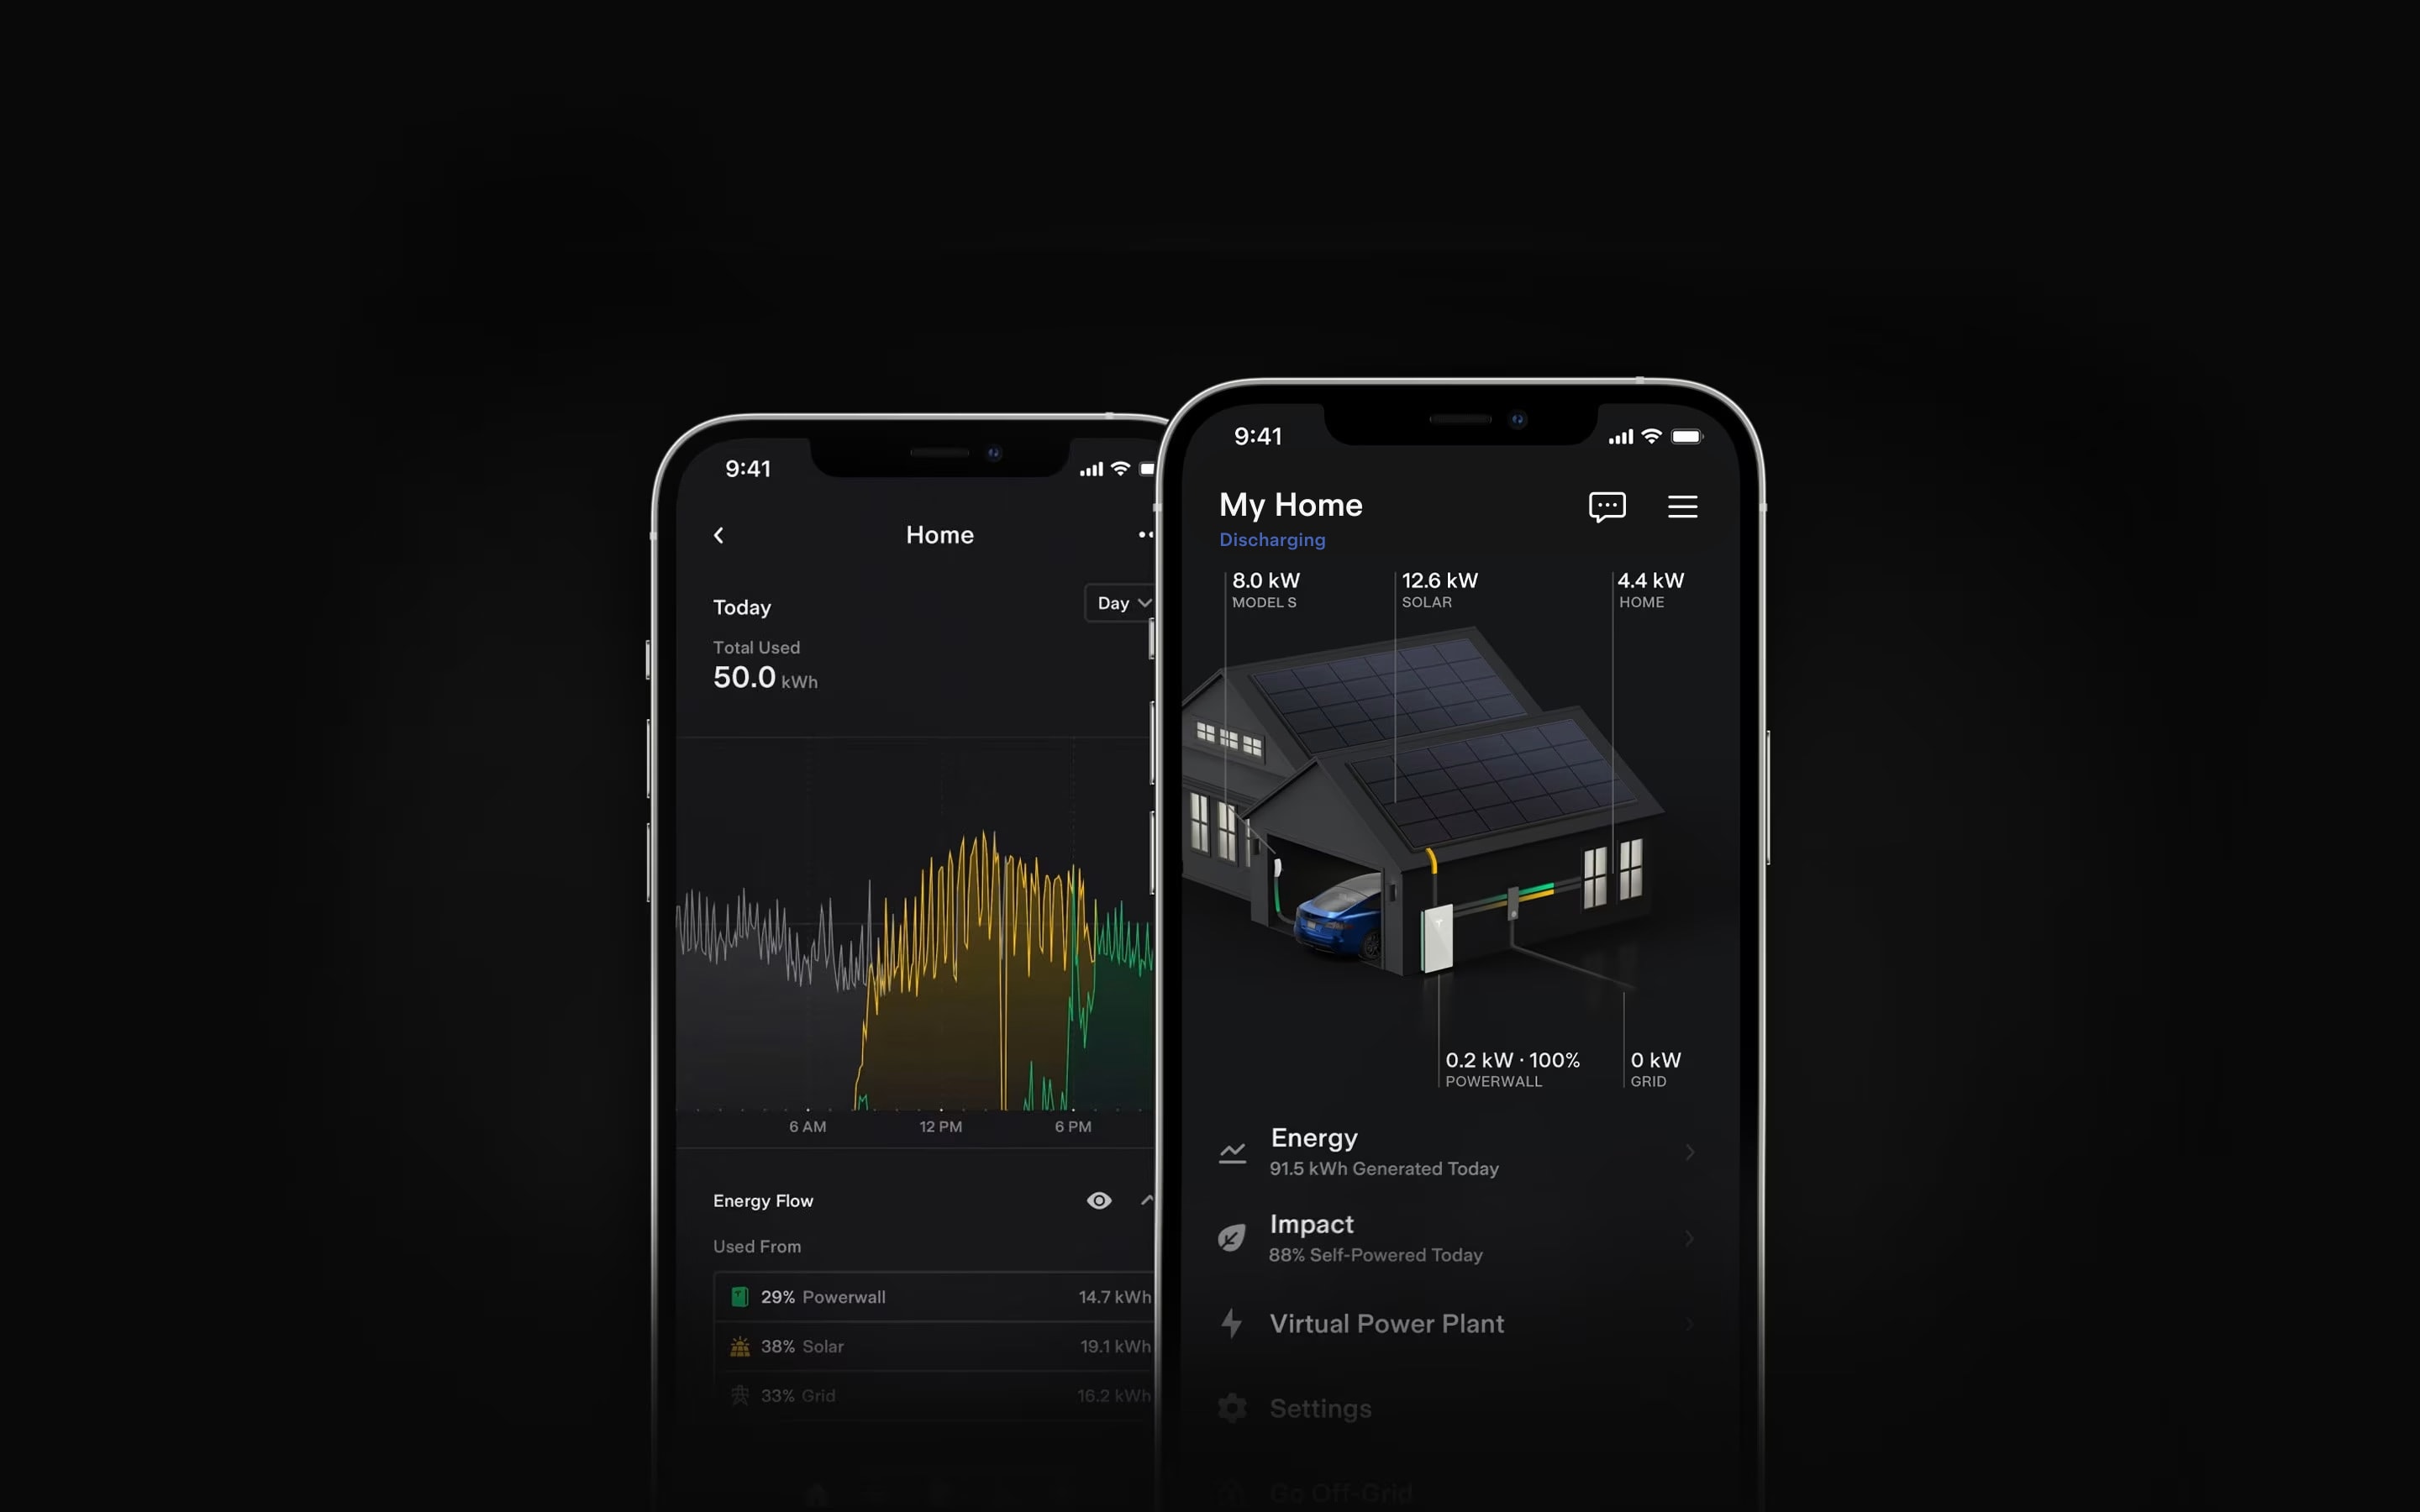 Tesla mobile app on iPhone